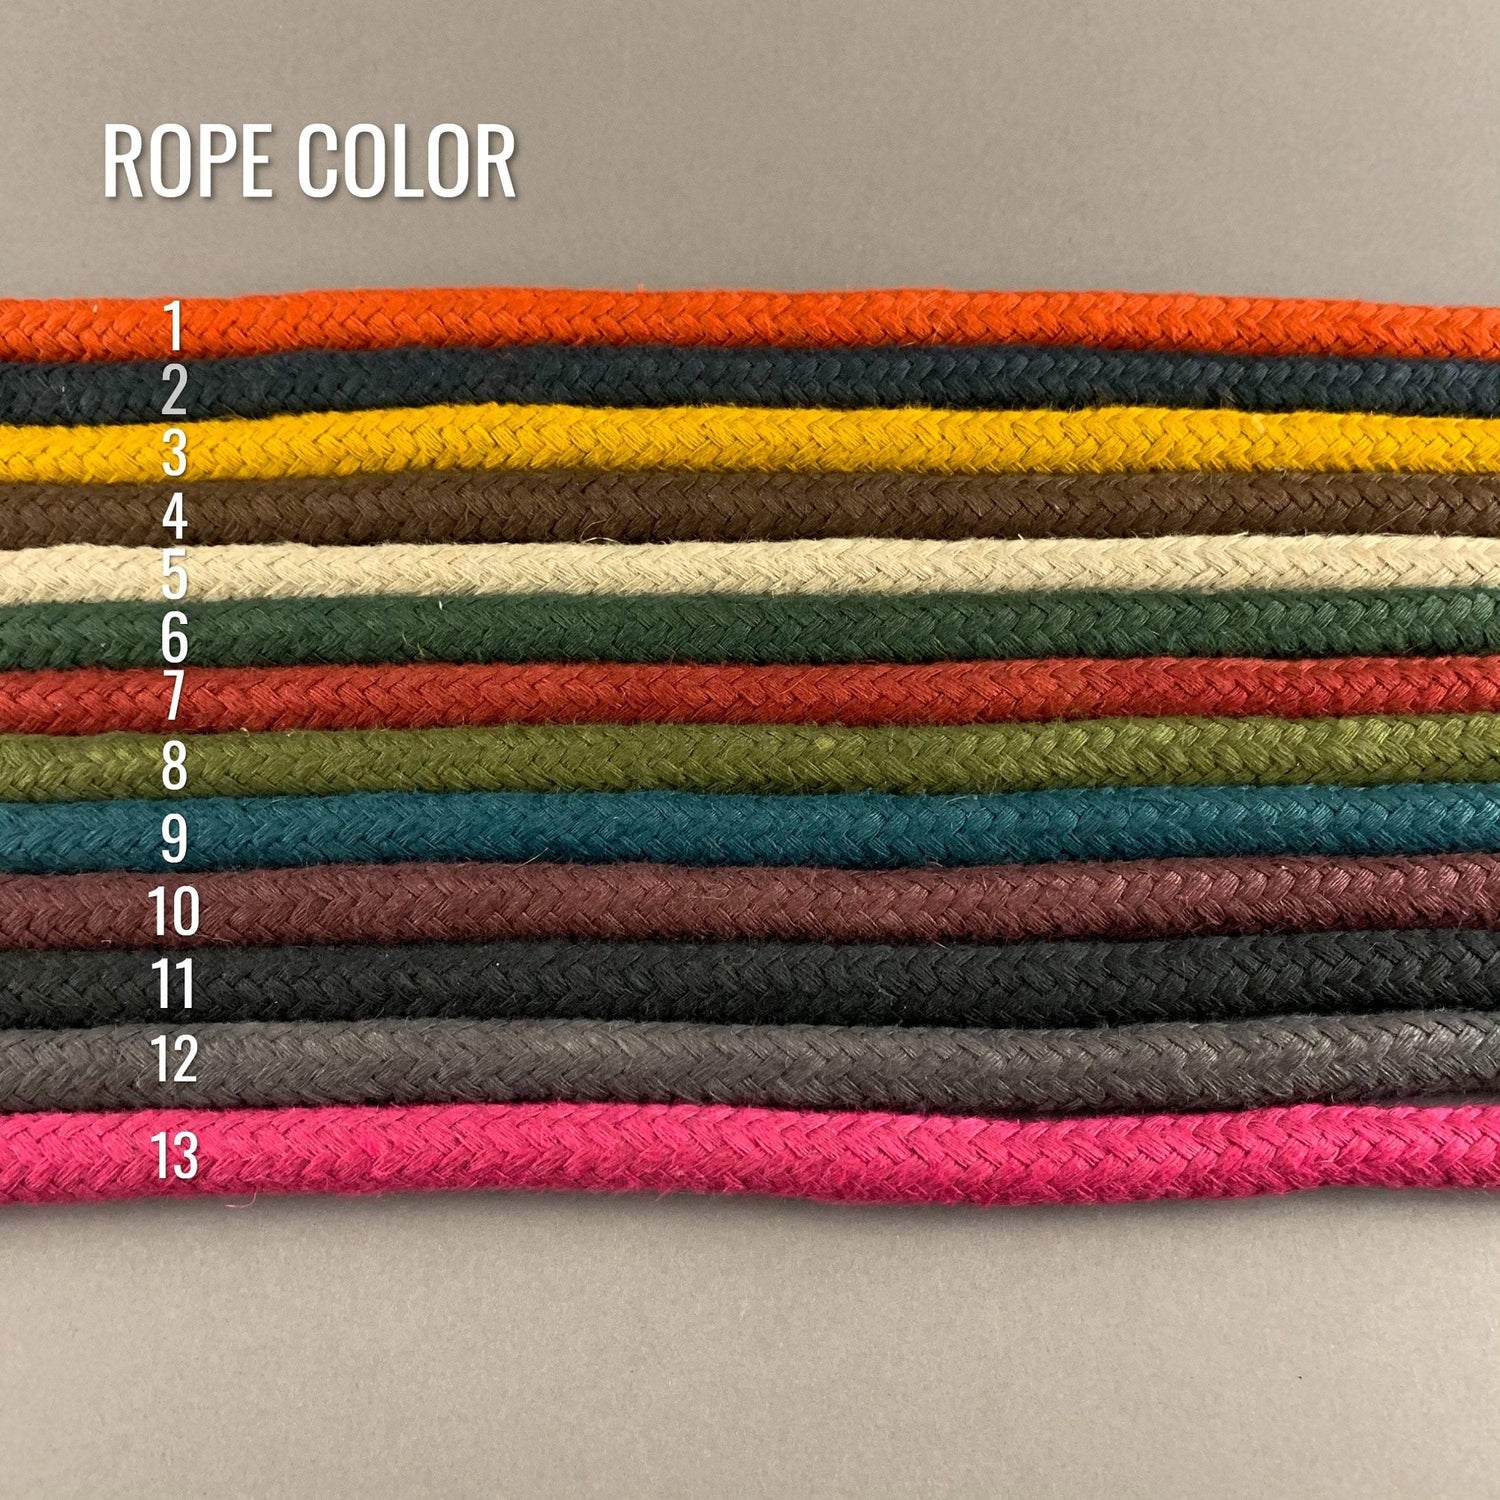 many color options for hemp dog leash